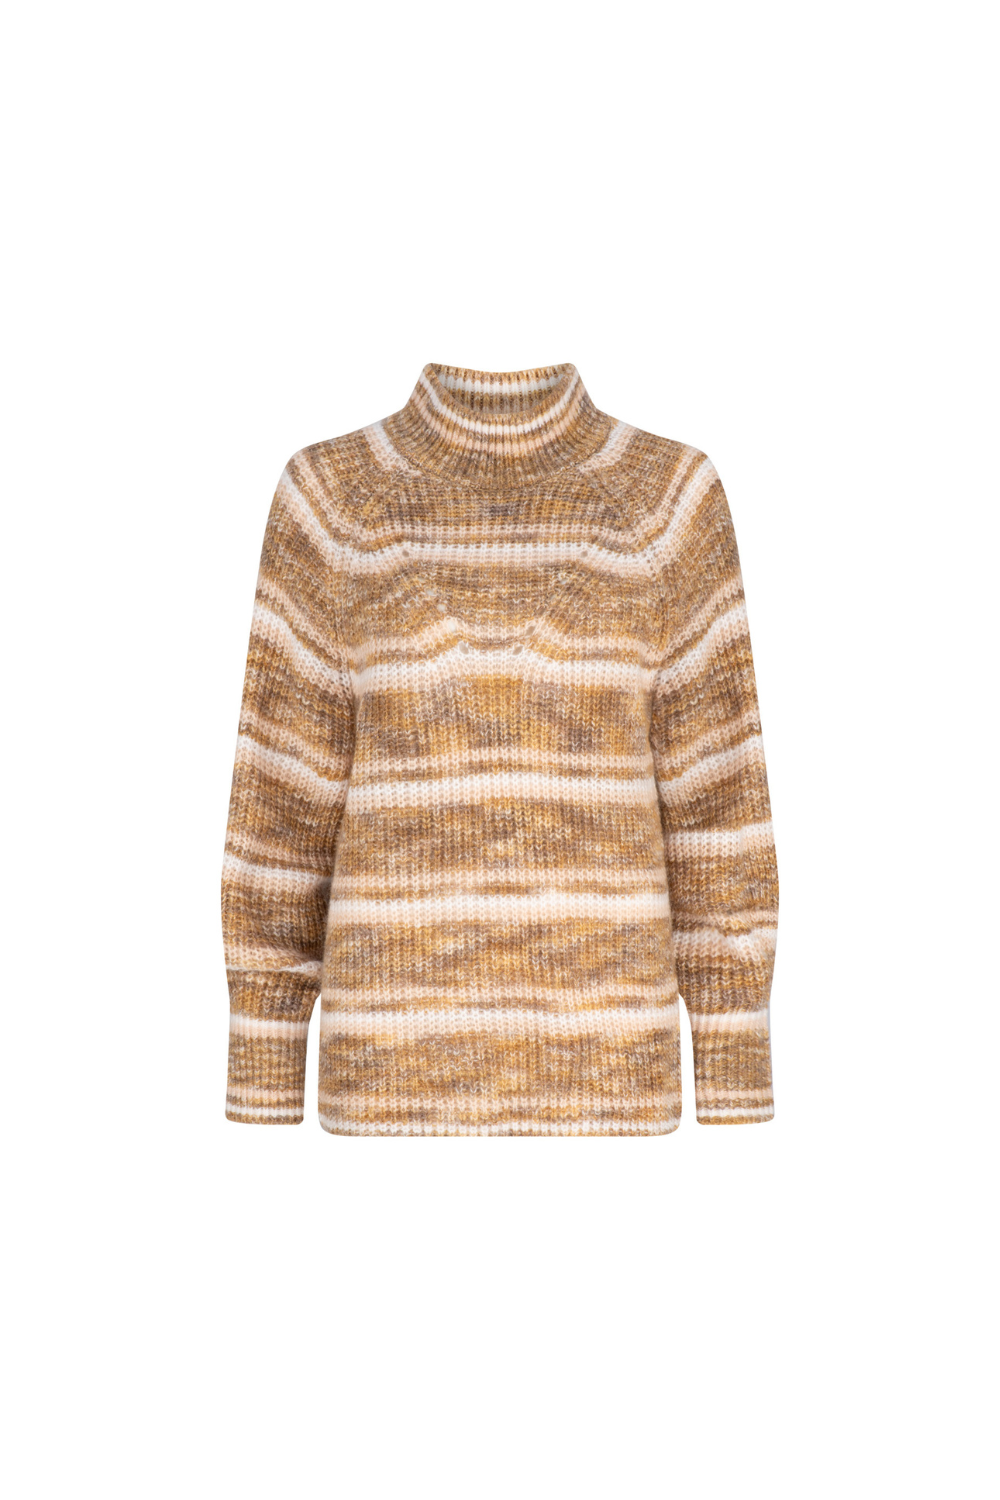 Olympia Coco Sweater - Latte Stripe